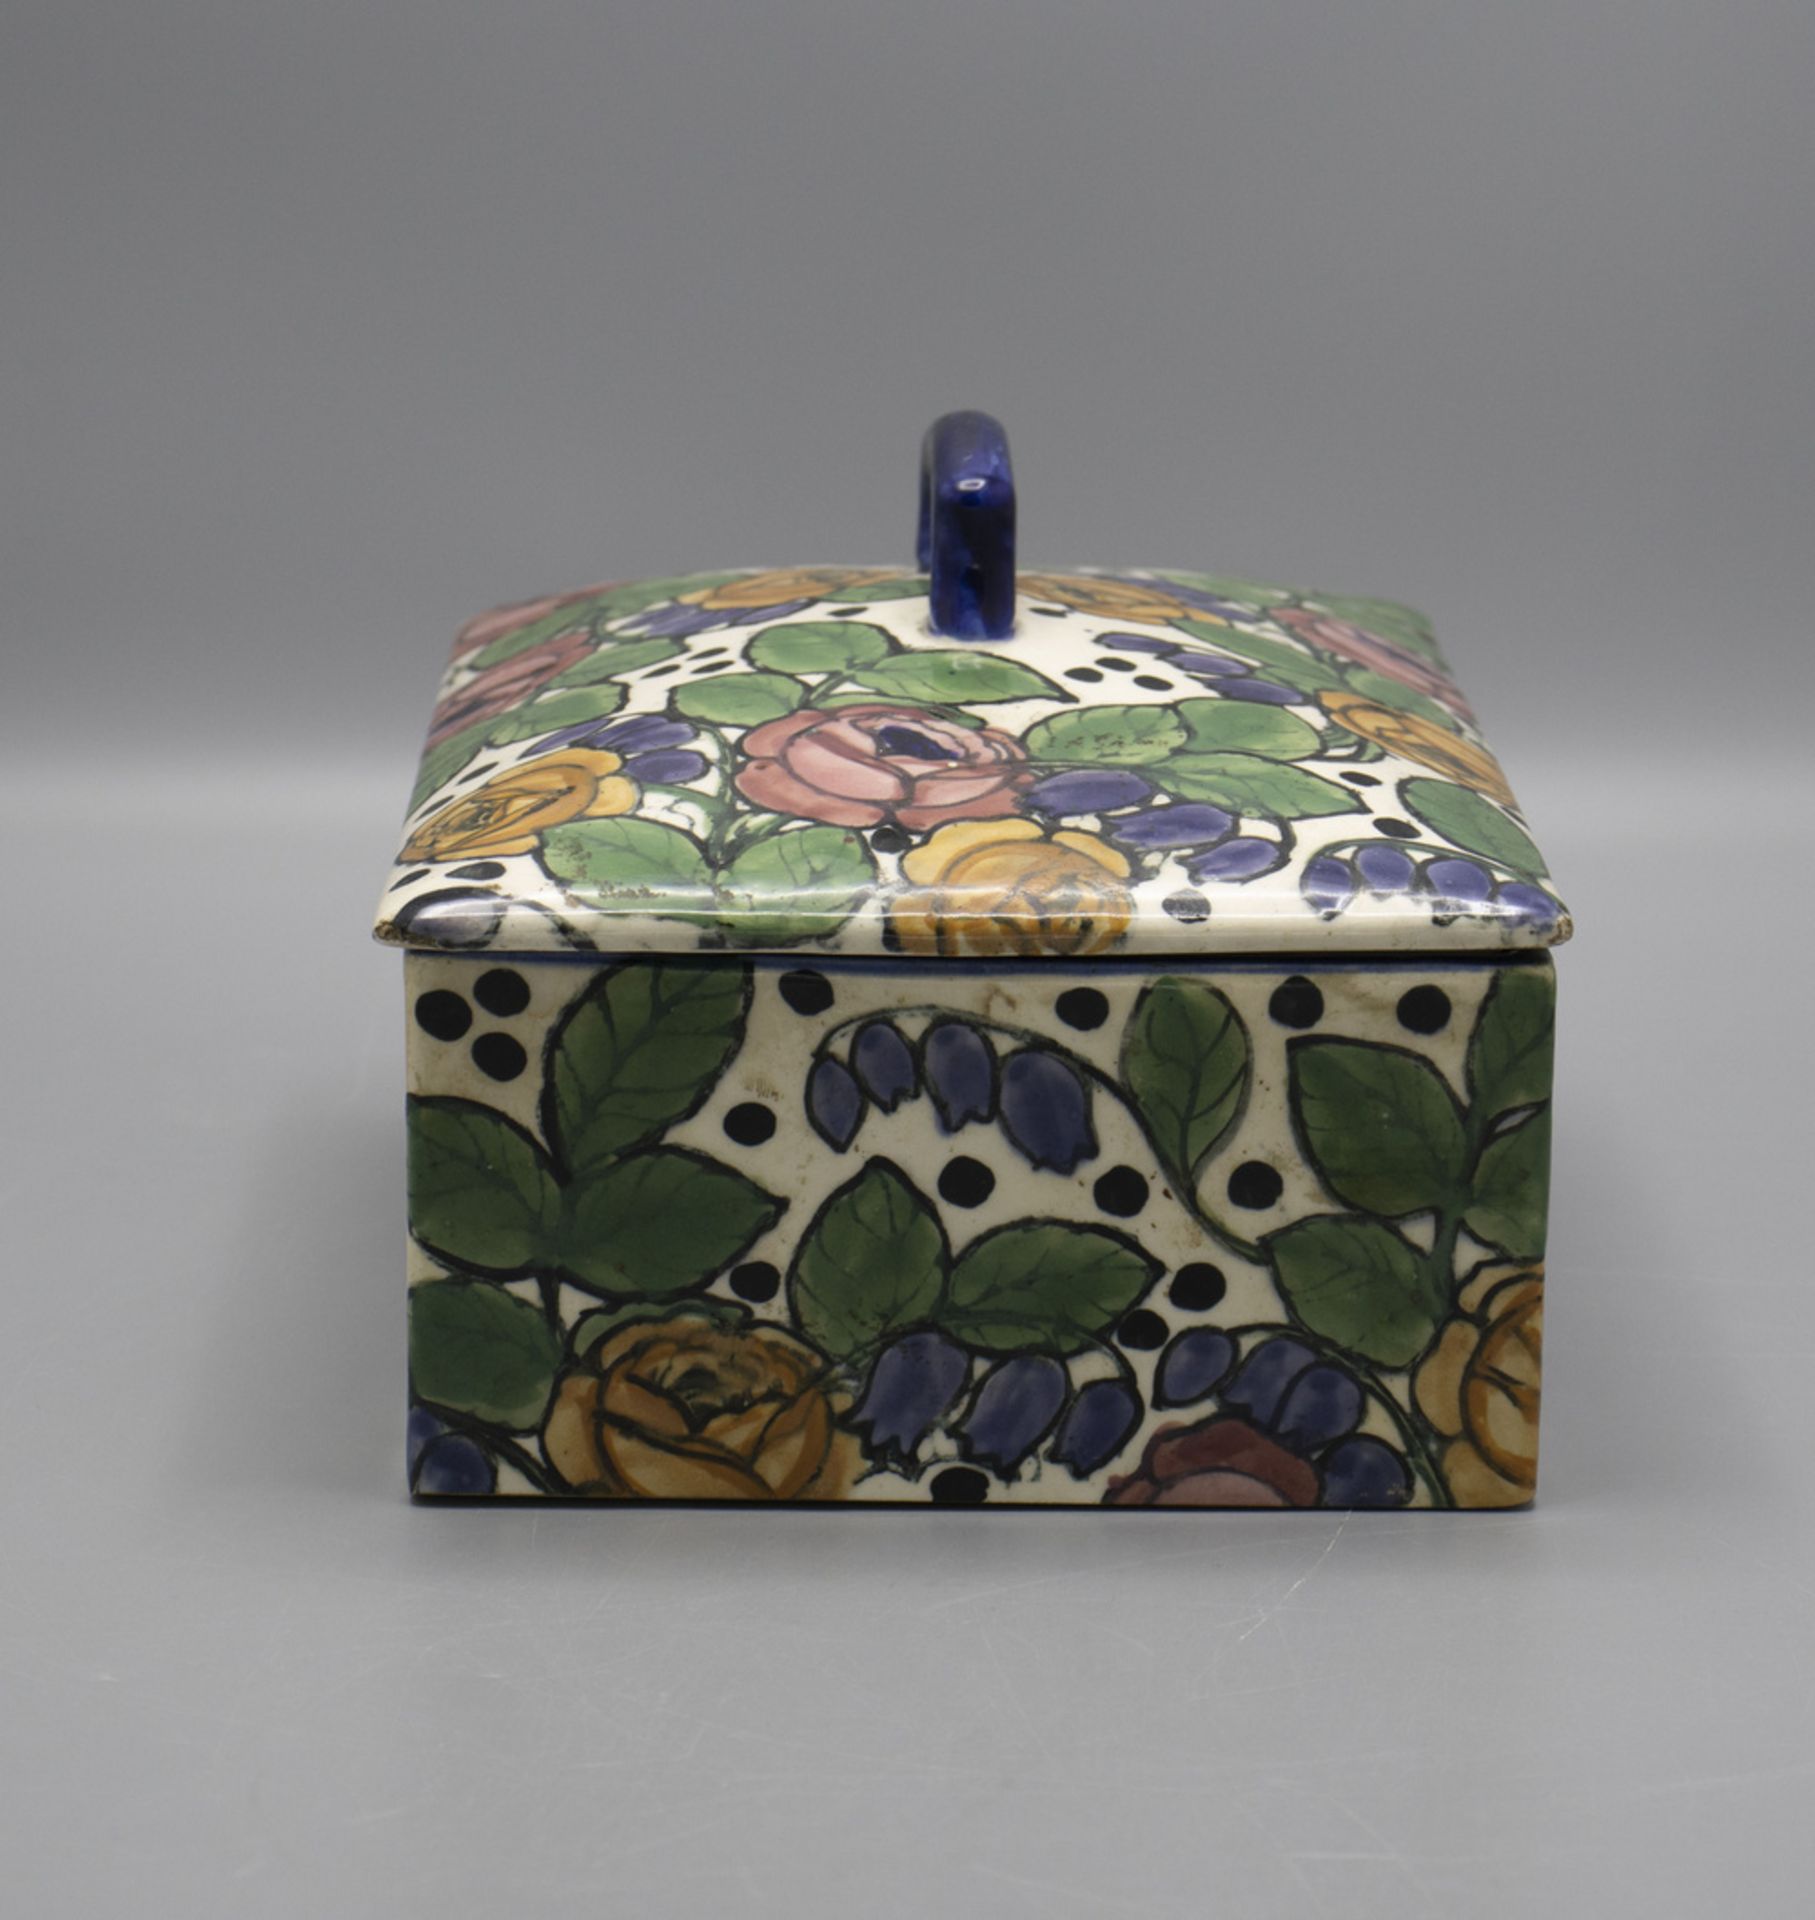 Keramik Deckeldose / A ceramic lidded box, um 1900 - Image 2 of 4